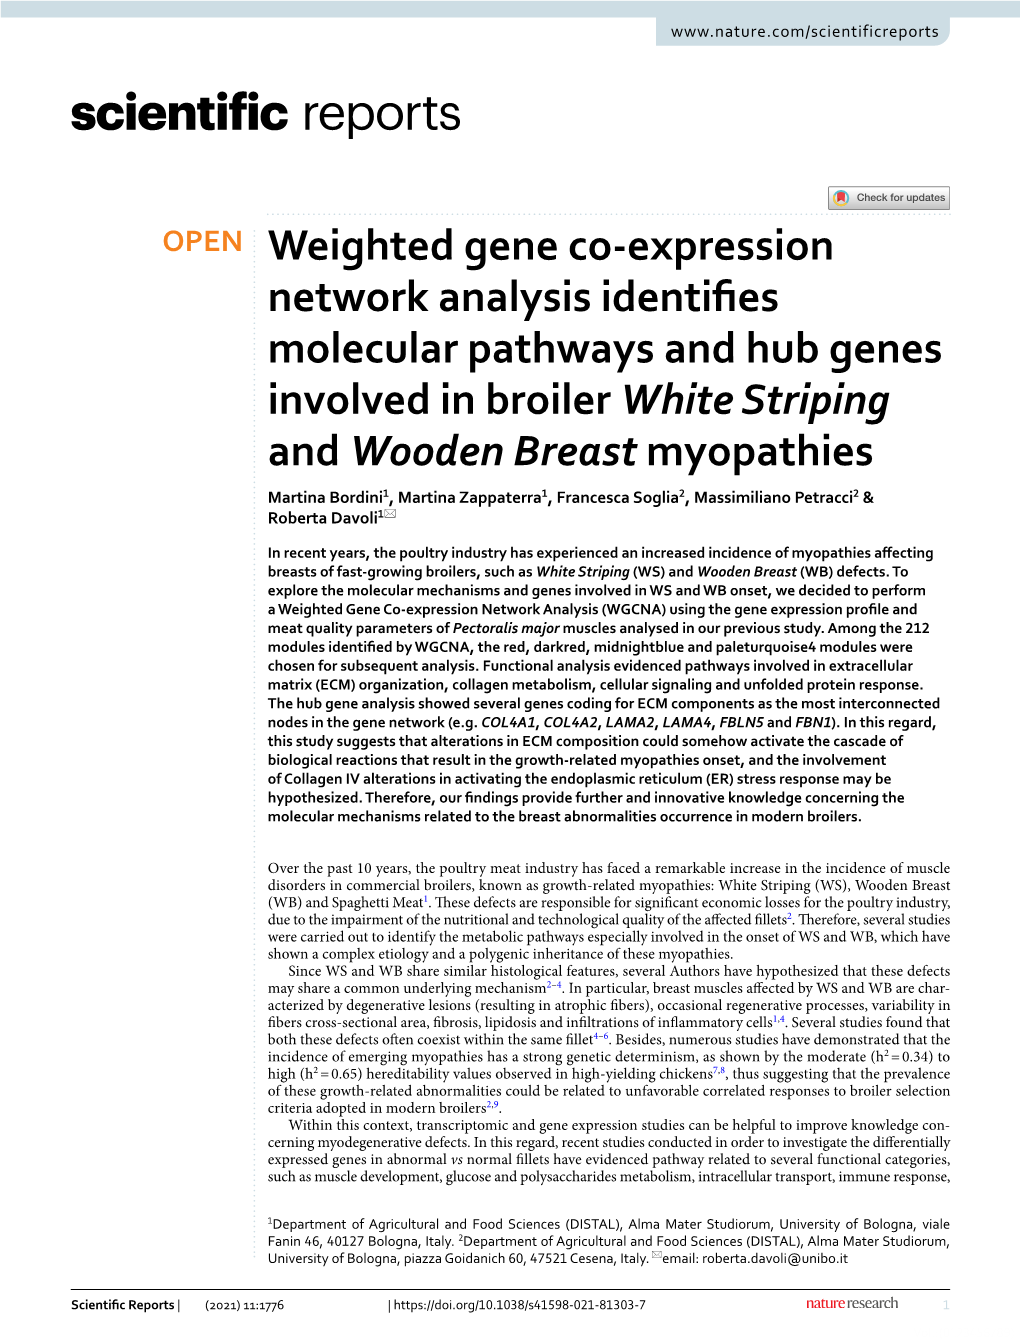 Weighted Gene Co-Expression Network Analysis Identifies Molecular